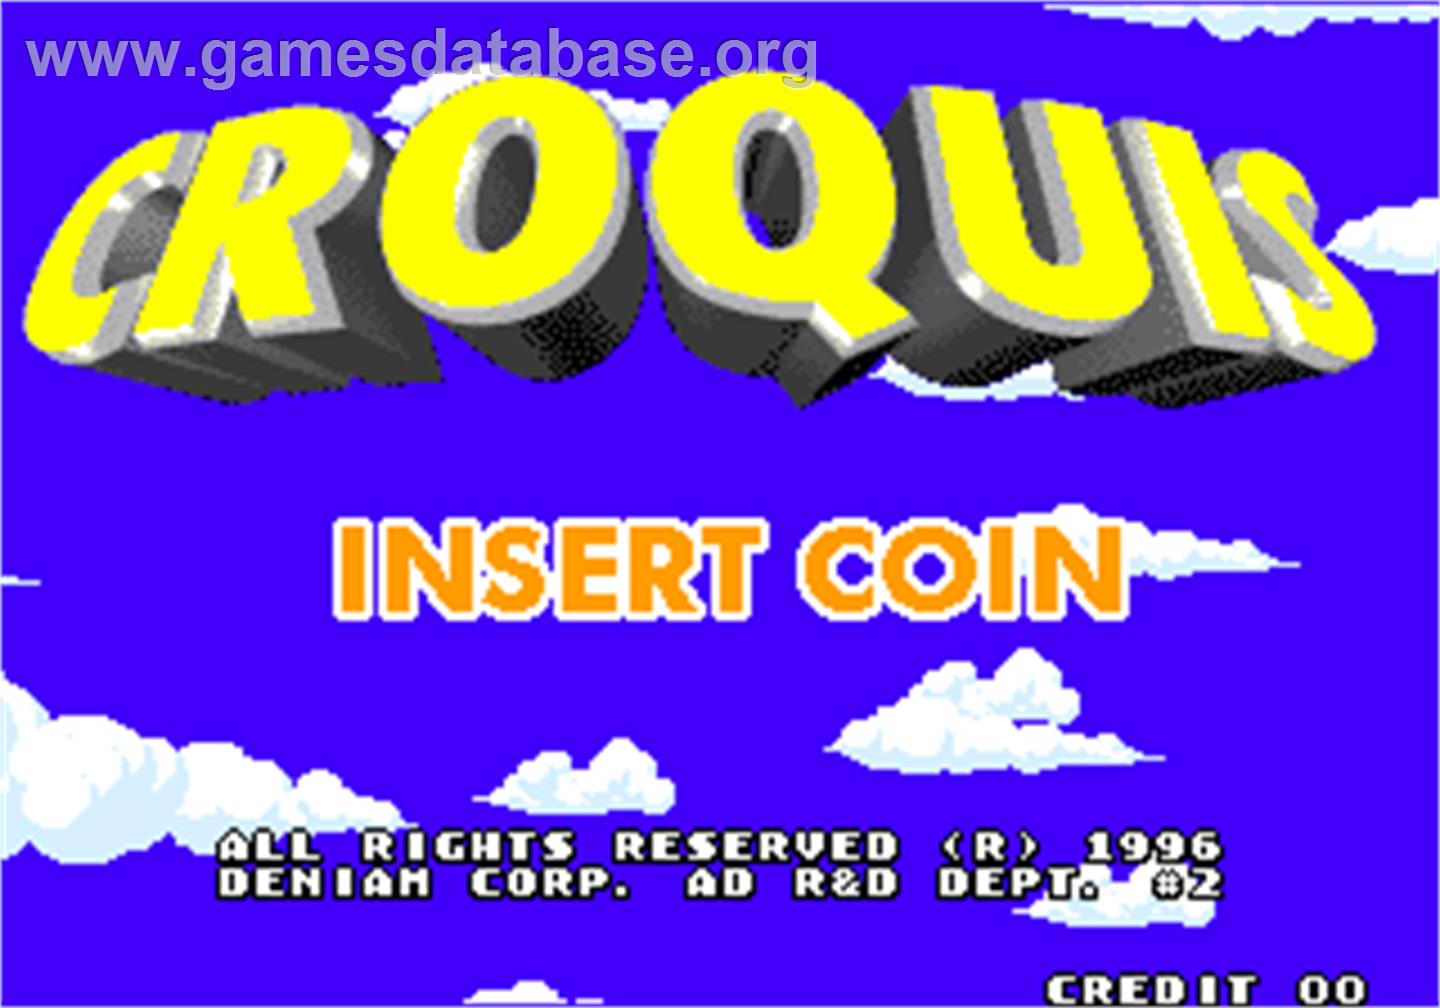 Croquis - Arcade - Artwork - Title Screen